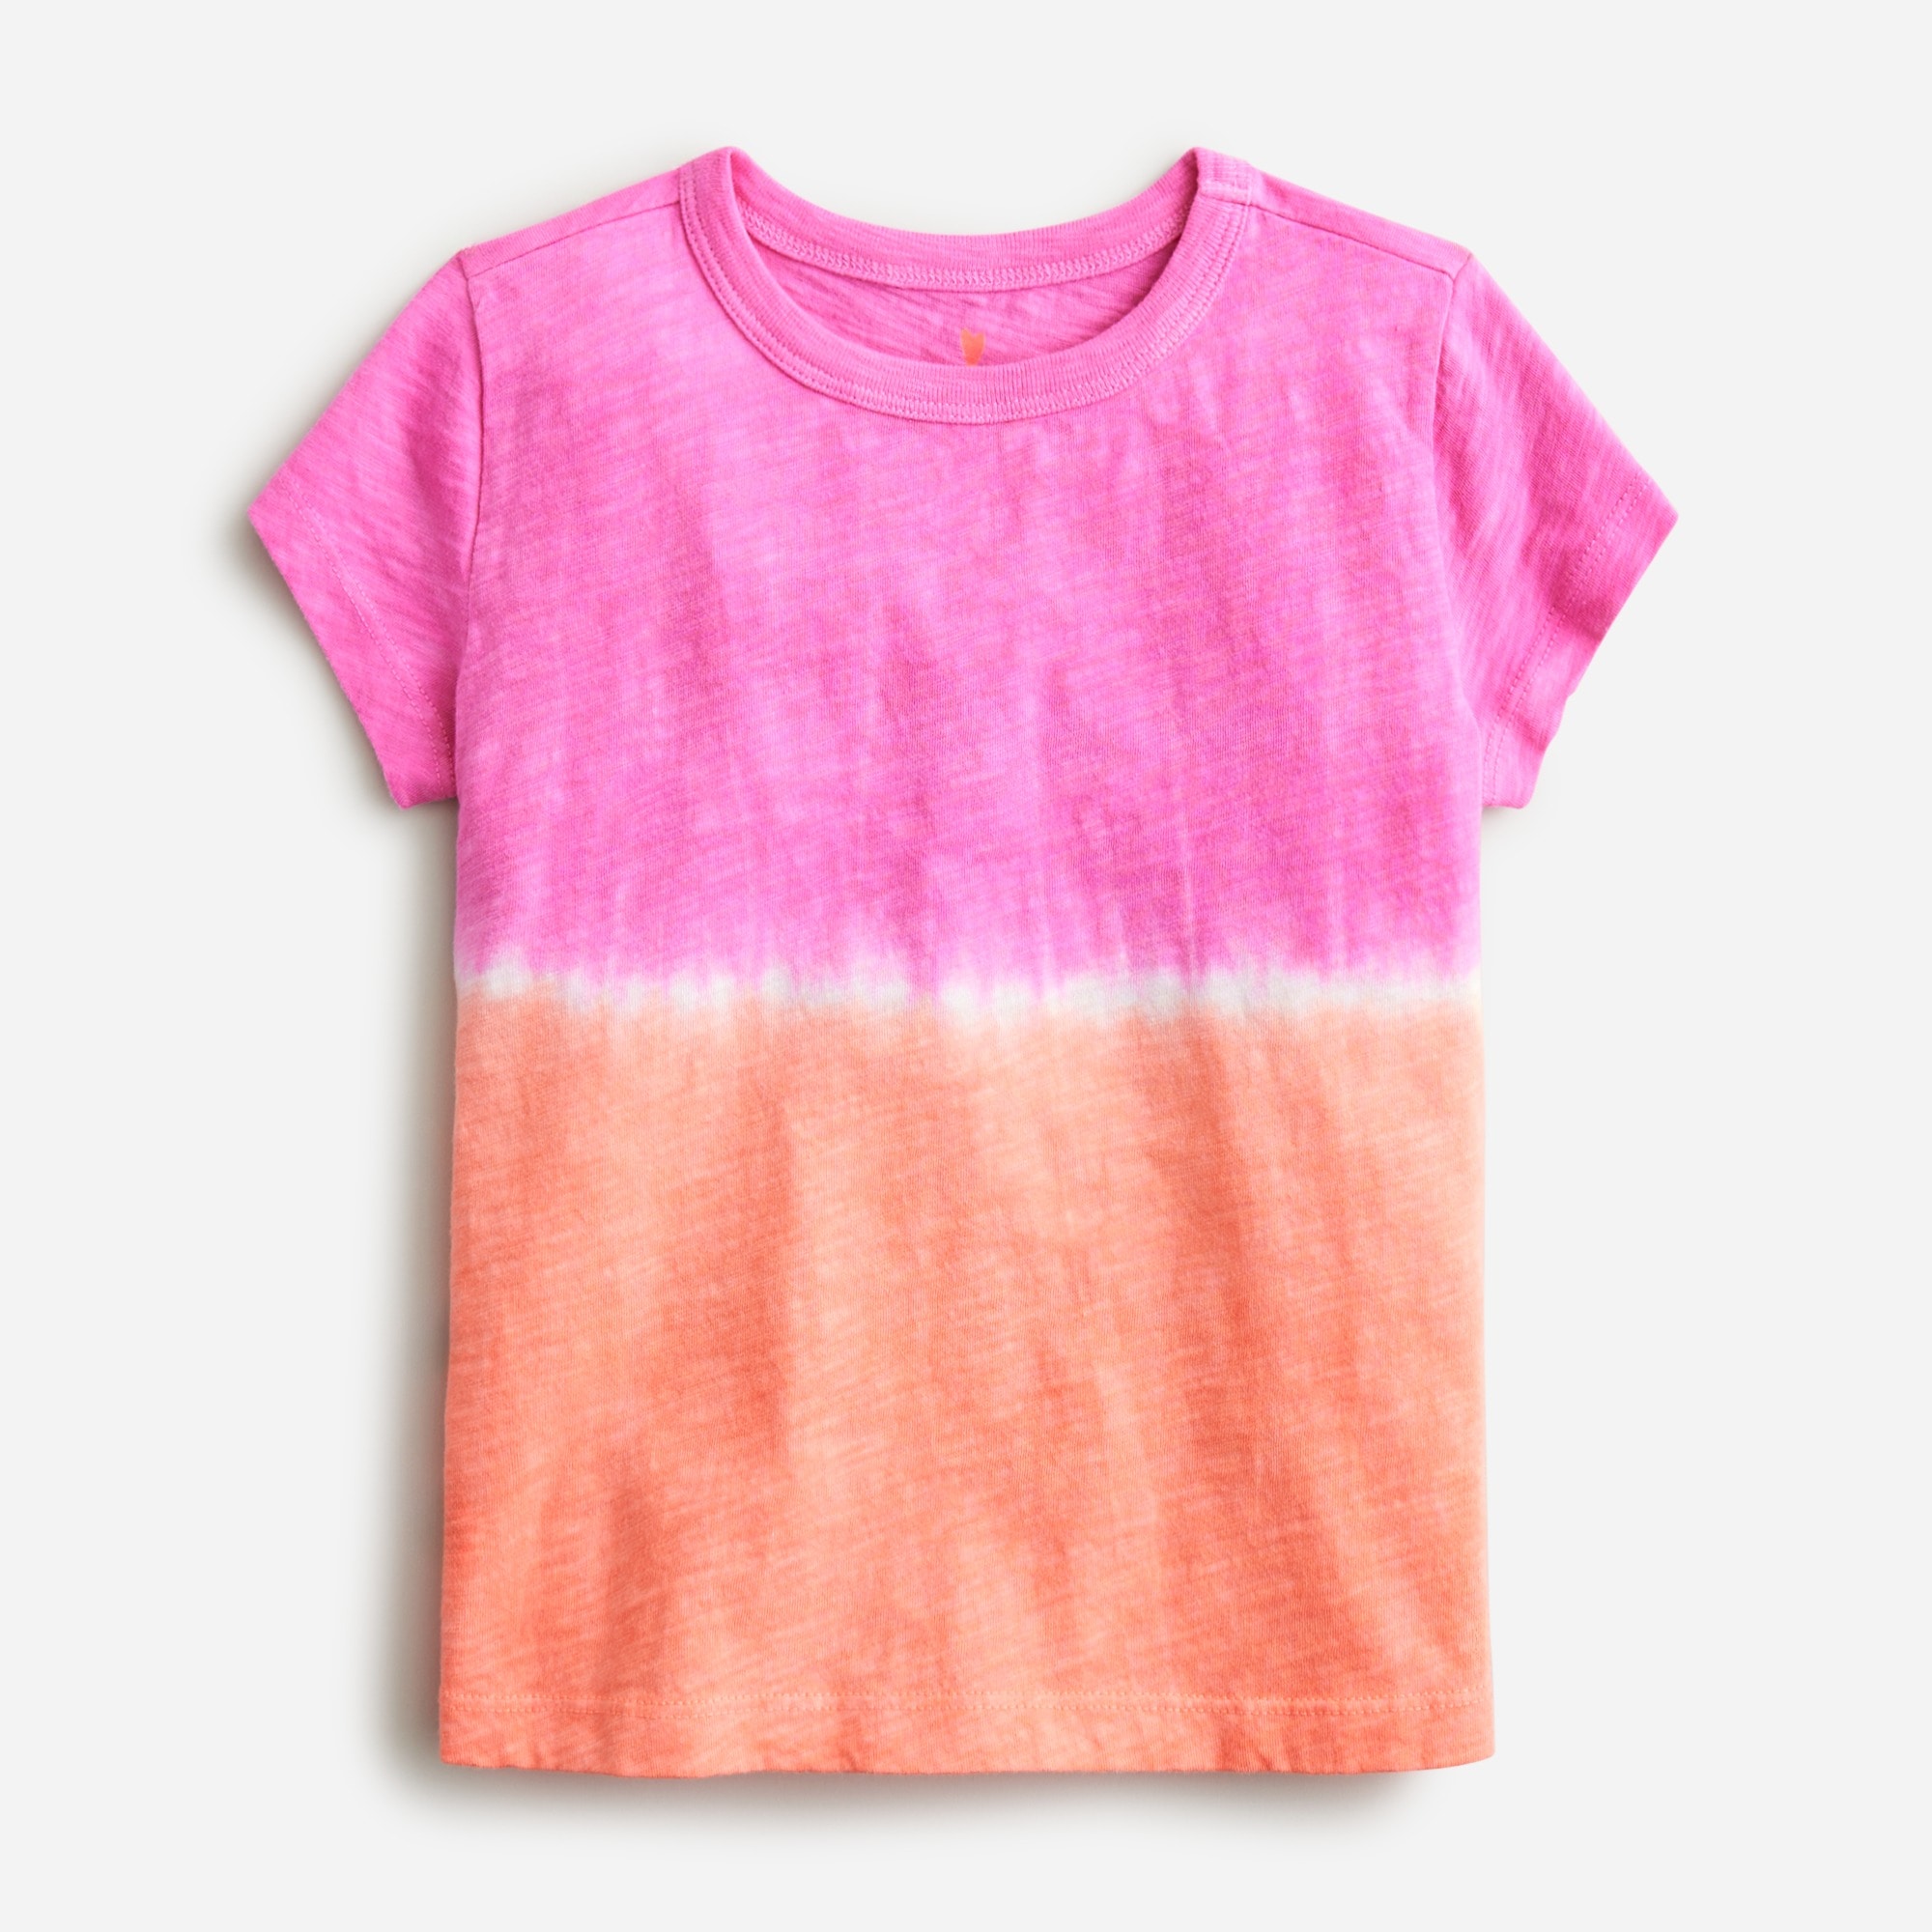  Girls' colorblock tie-dye T-shirt